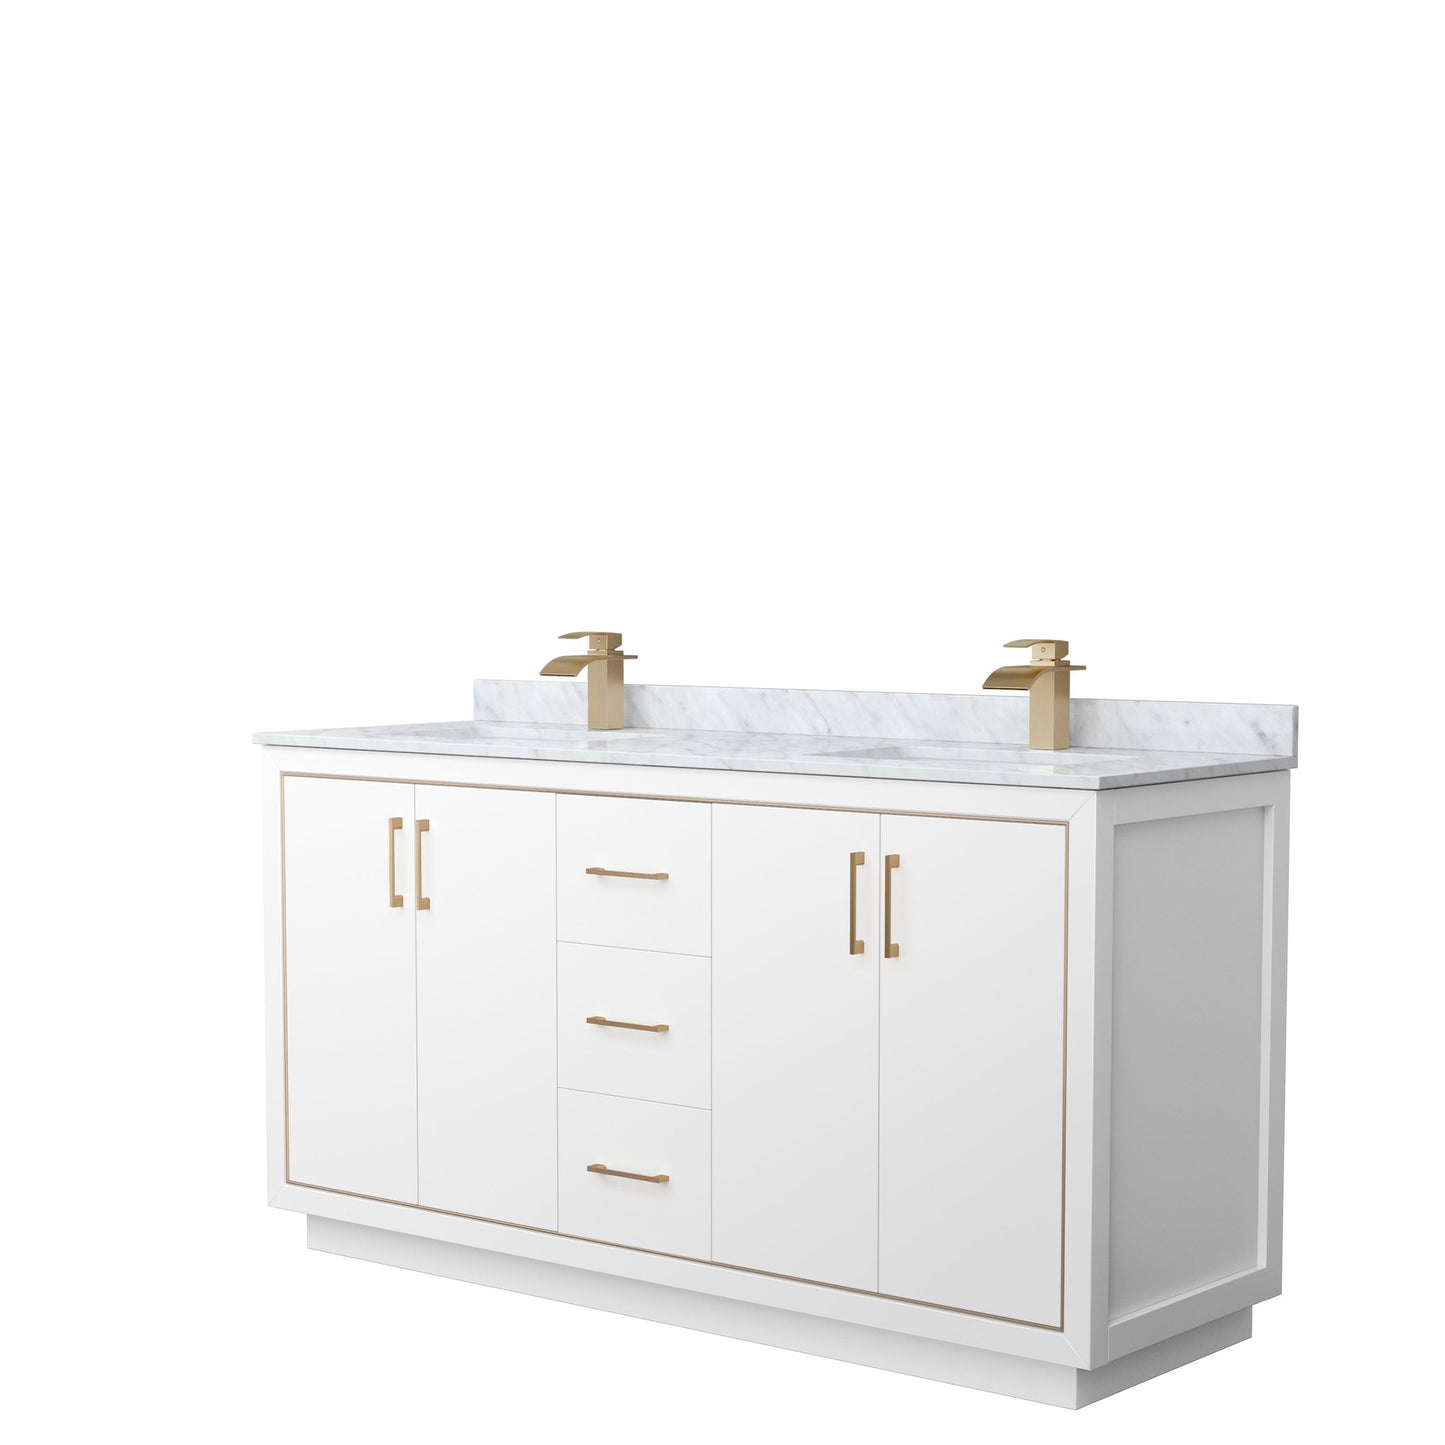 Wyndham Collection Icon 66" Double Bathroom Vanity in White, White Carrara Marble Countertop, Undermount Square Sinks, Satin Bronze Trim